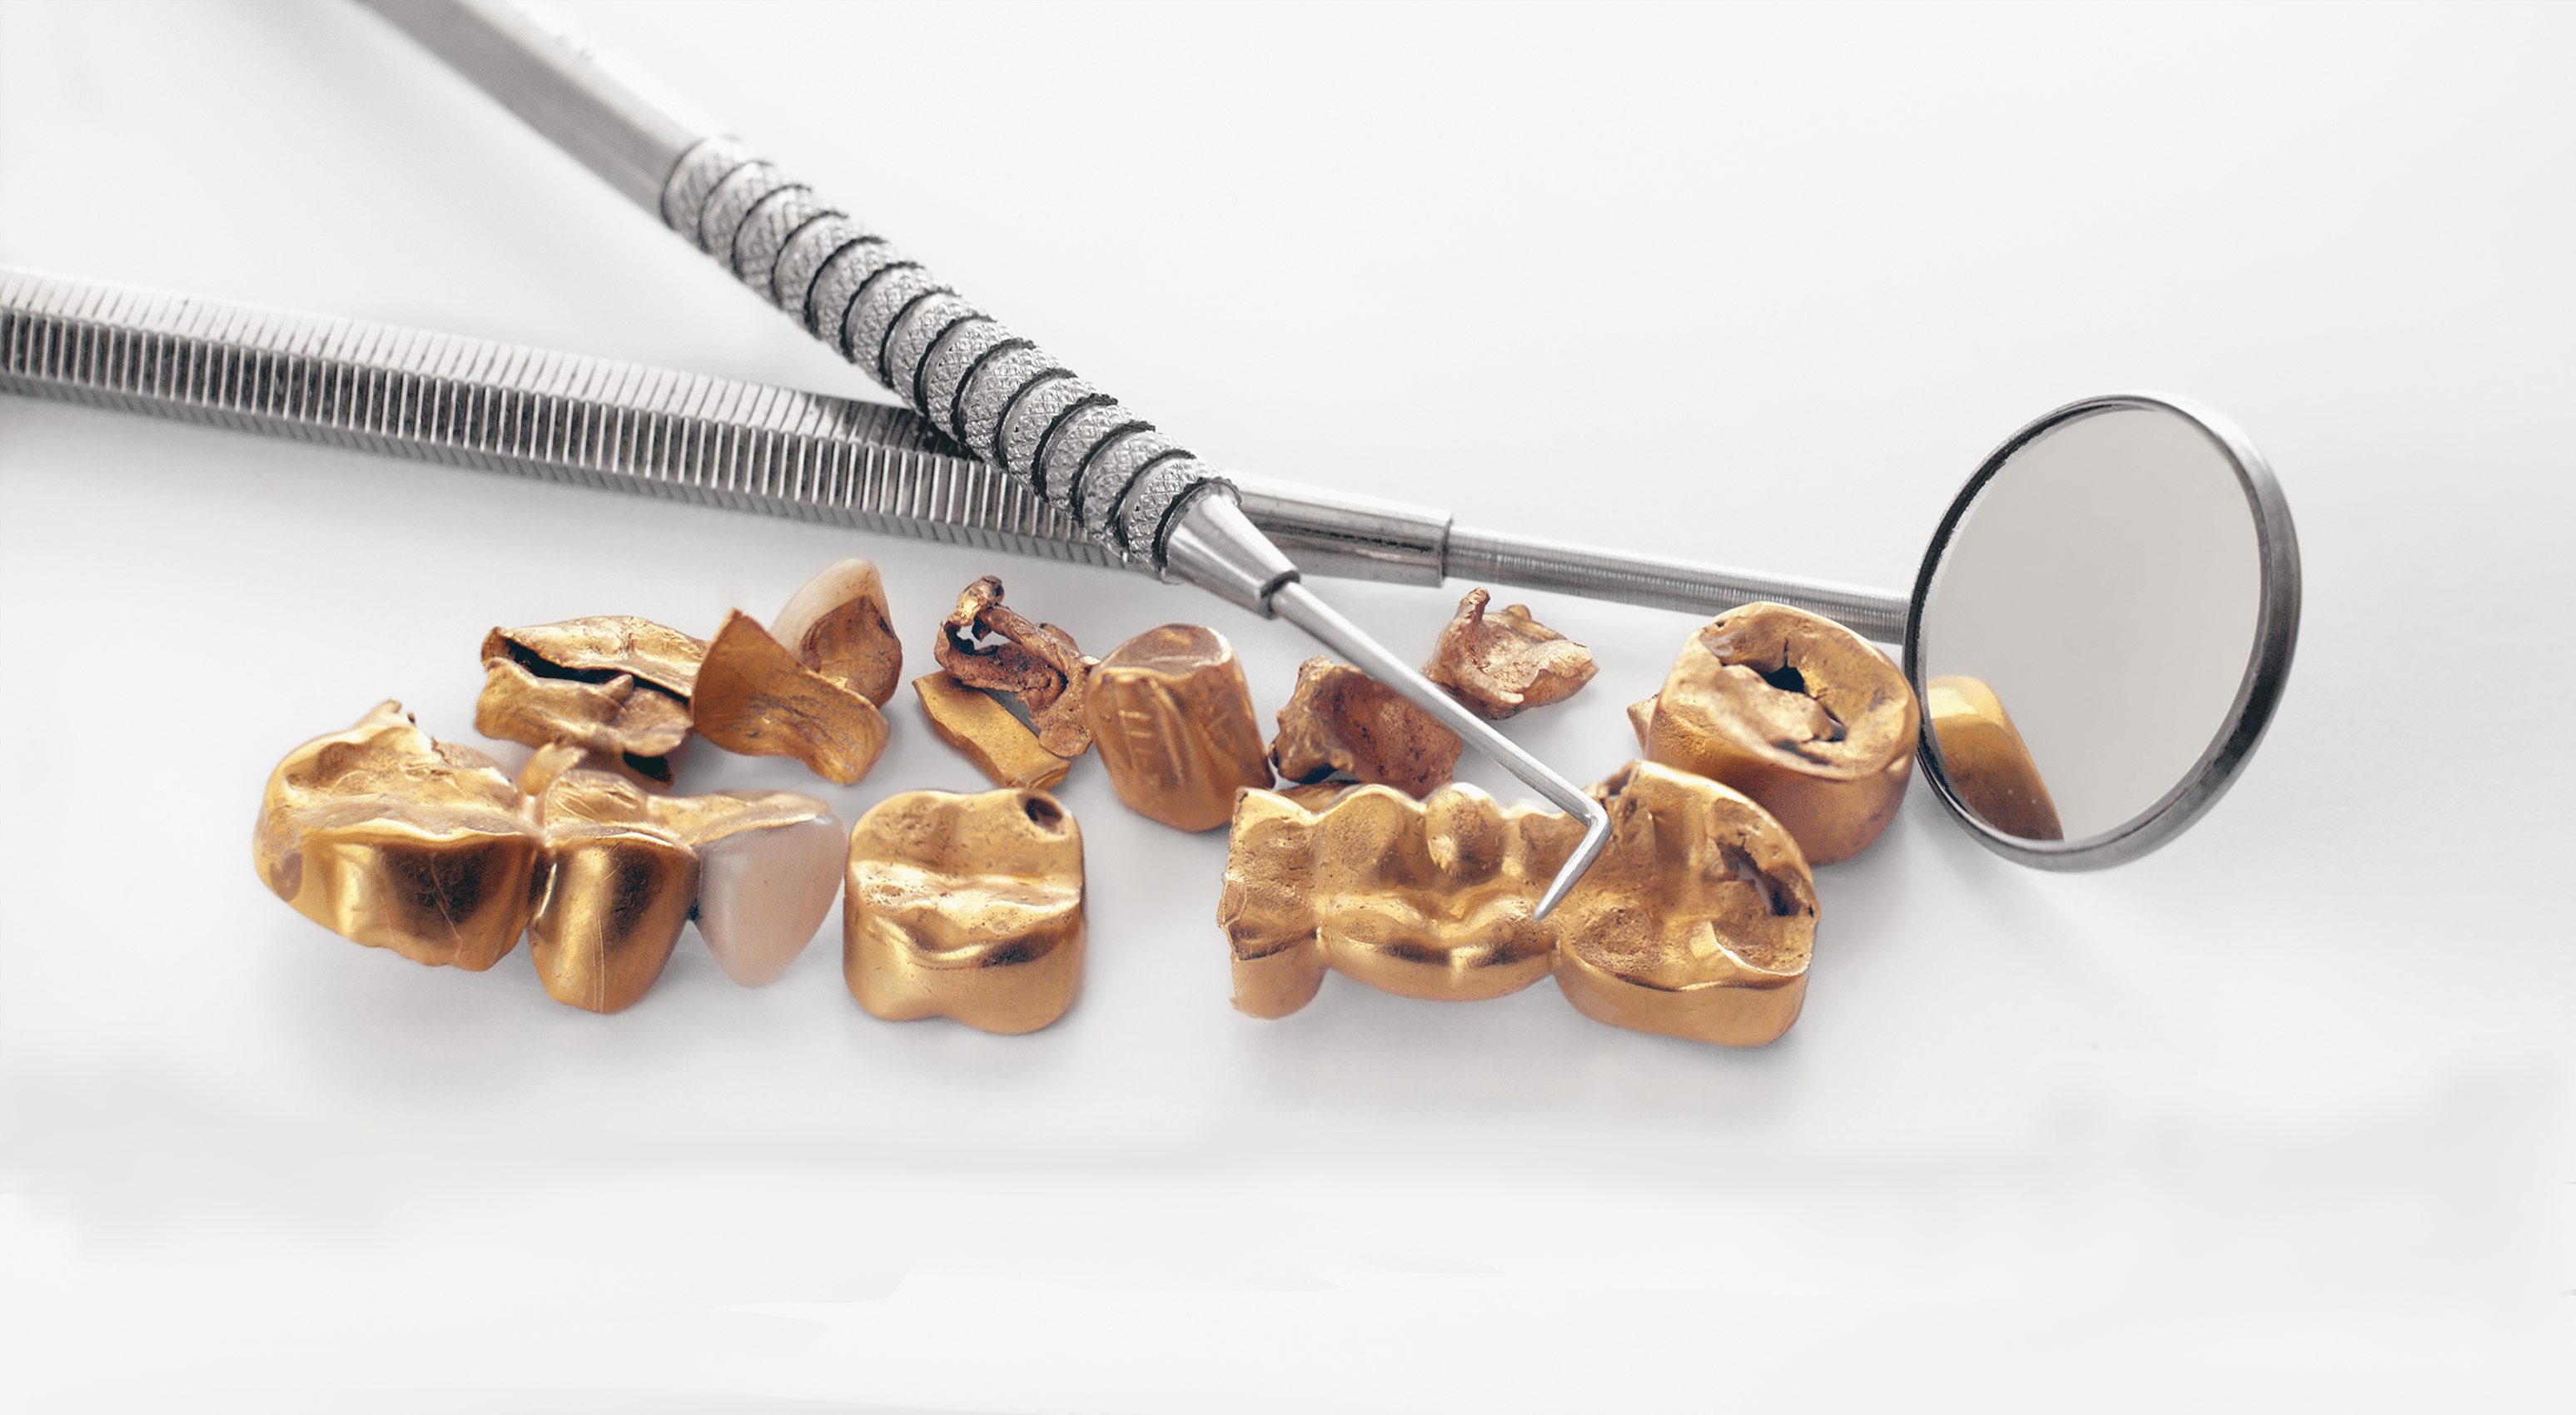 Dental exam tools laid behind an assortment of gold dental bridges